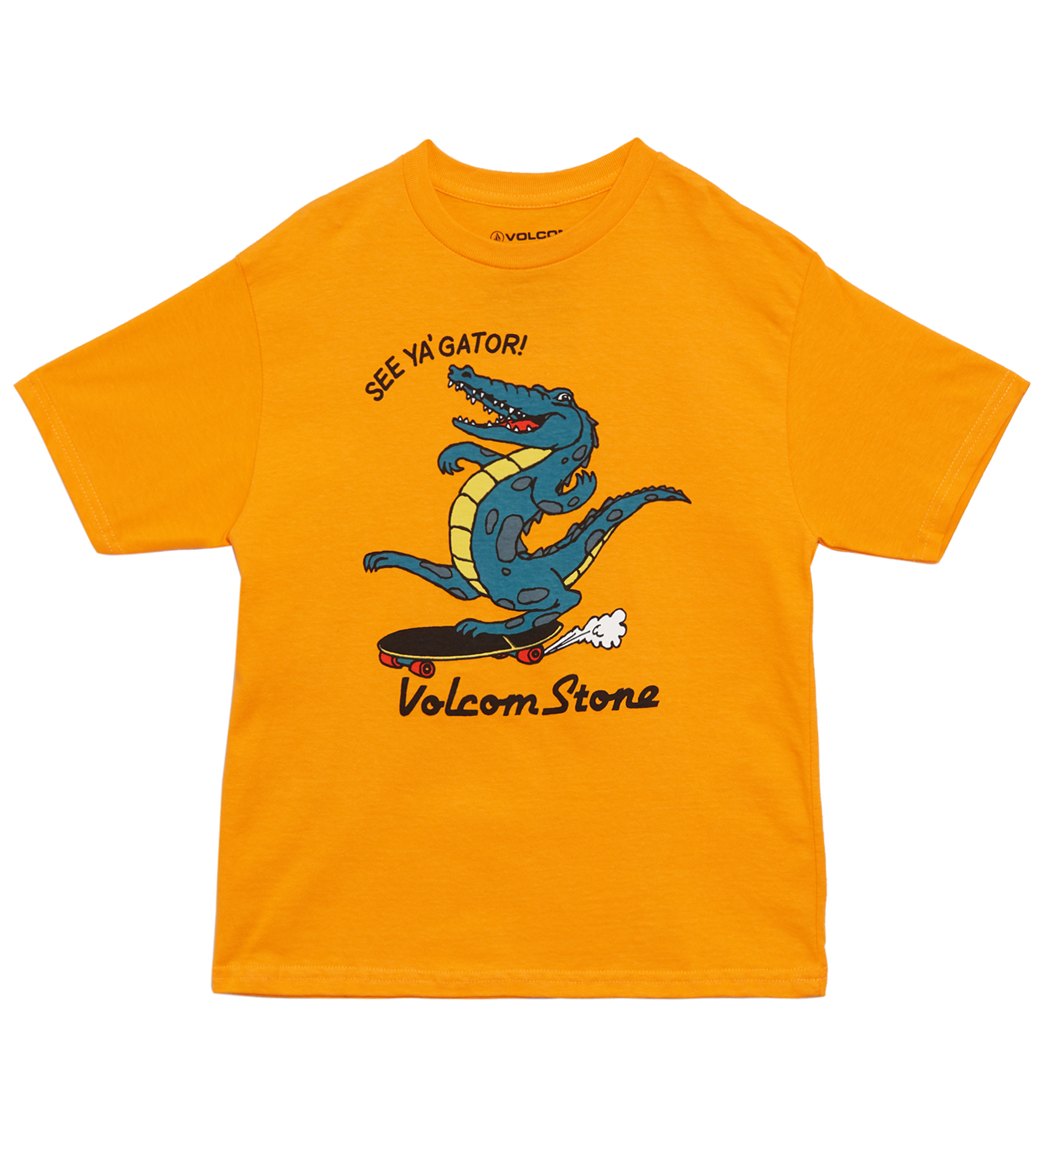 Volcom Boys' See Ya Gator Short Sleeve Tee Shirt Toddler/Little/Big Kid - Orange Large Big Cotton/Polyester - Swimoutlet.com